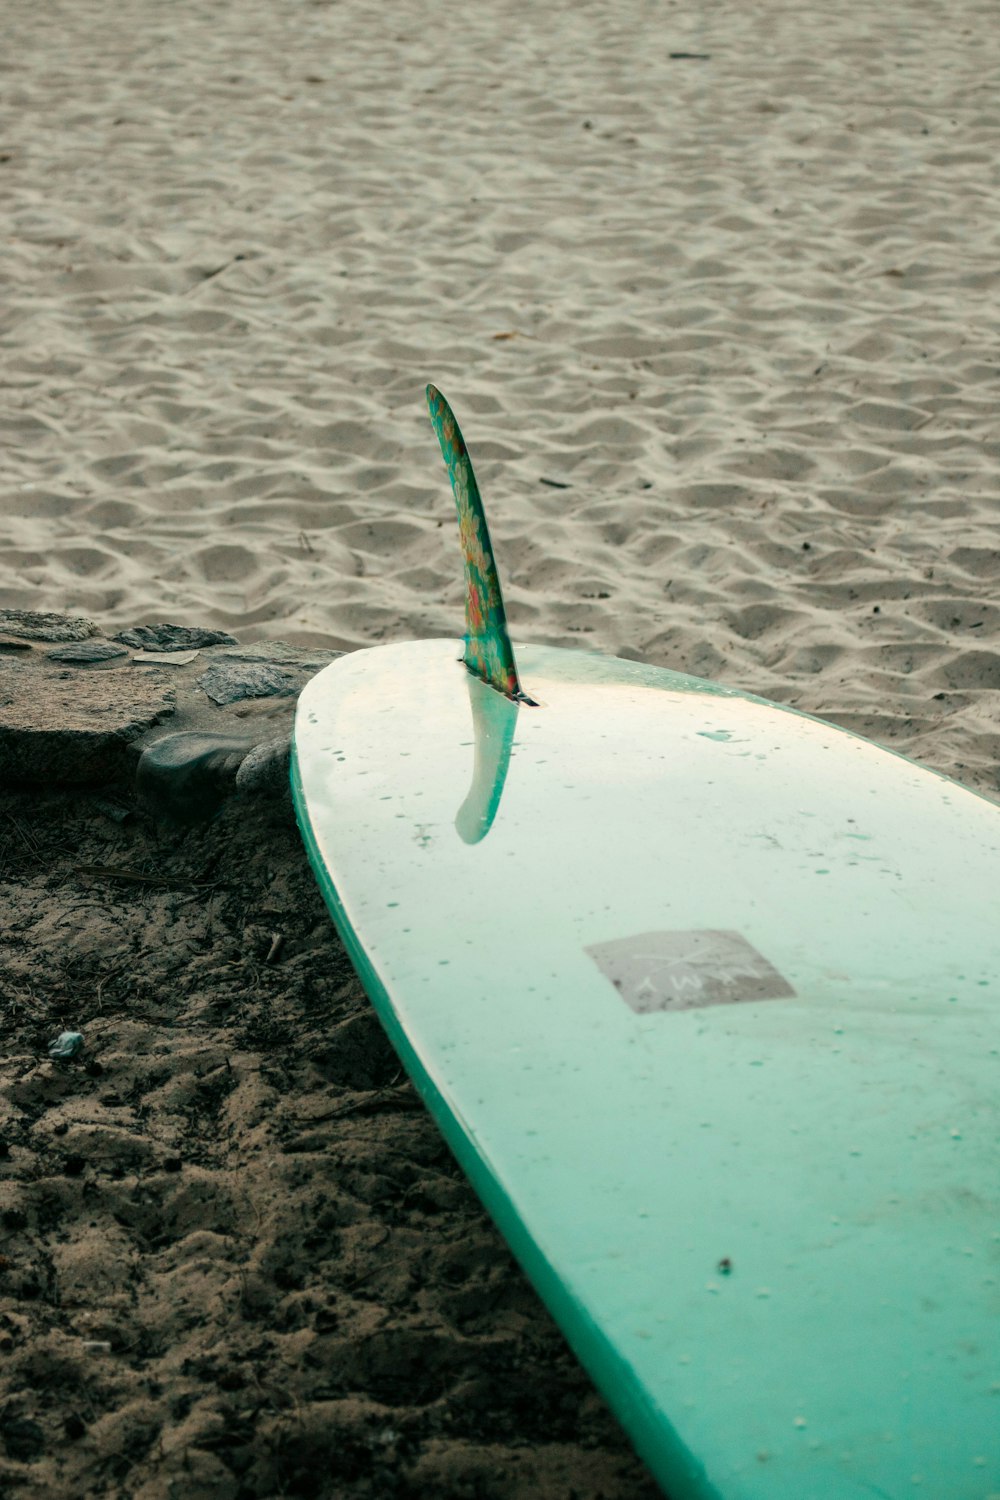 tavola da surf verde e bianca su sabbia marrone